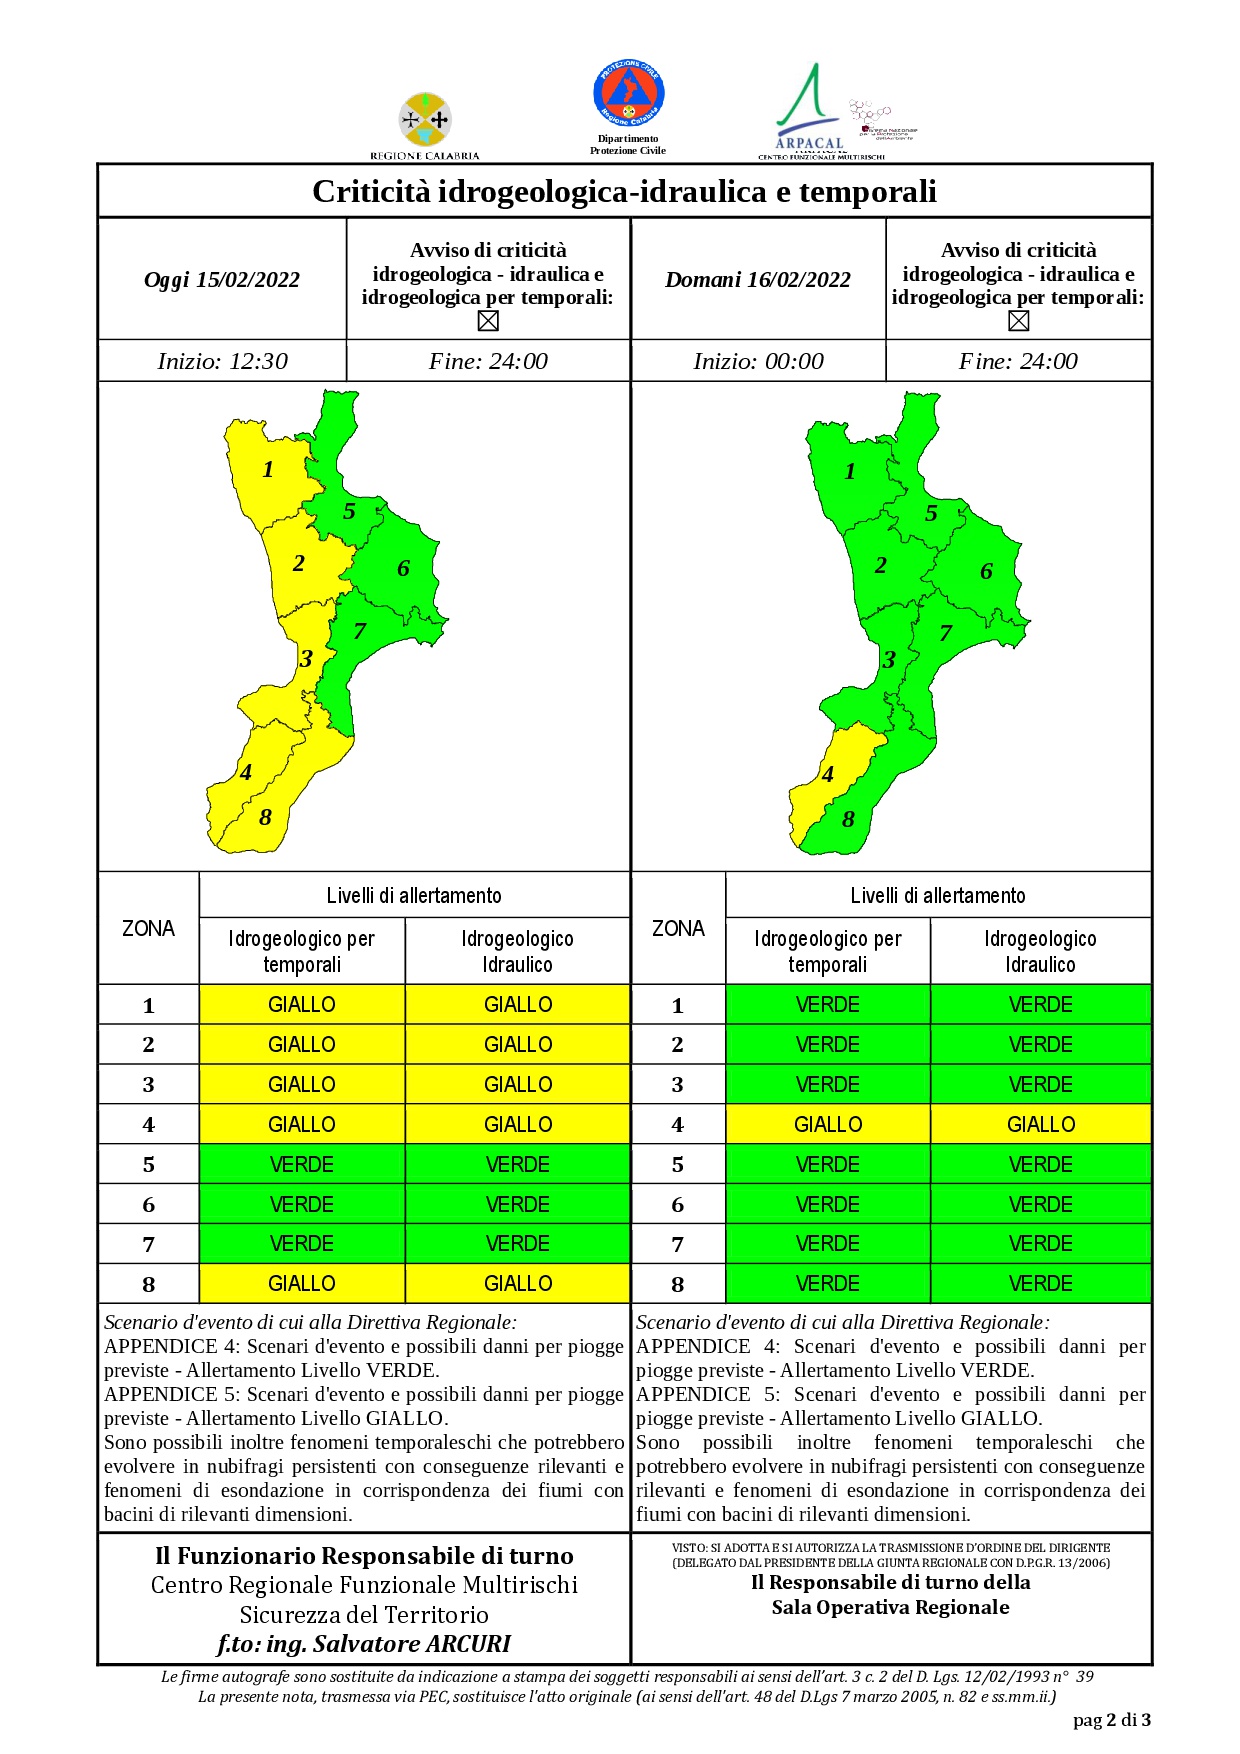 Criticità idrogeologica-idraulica e temporali in Calabria 15-02-2022